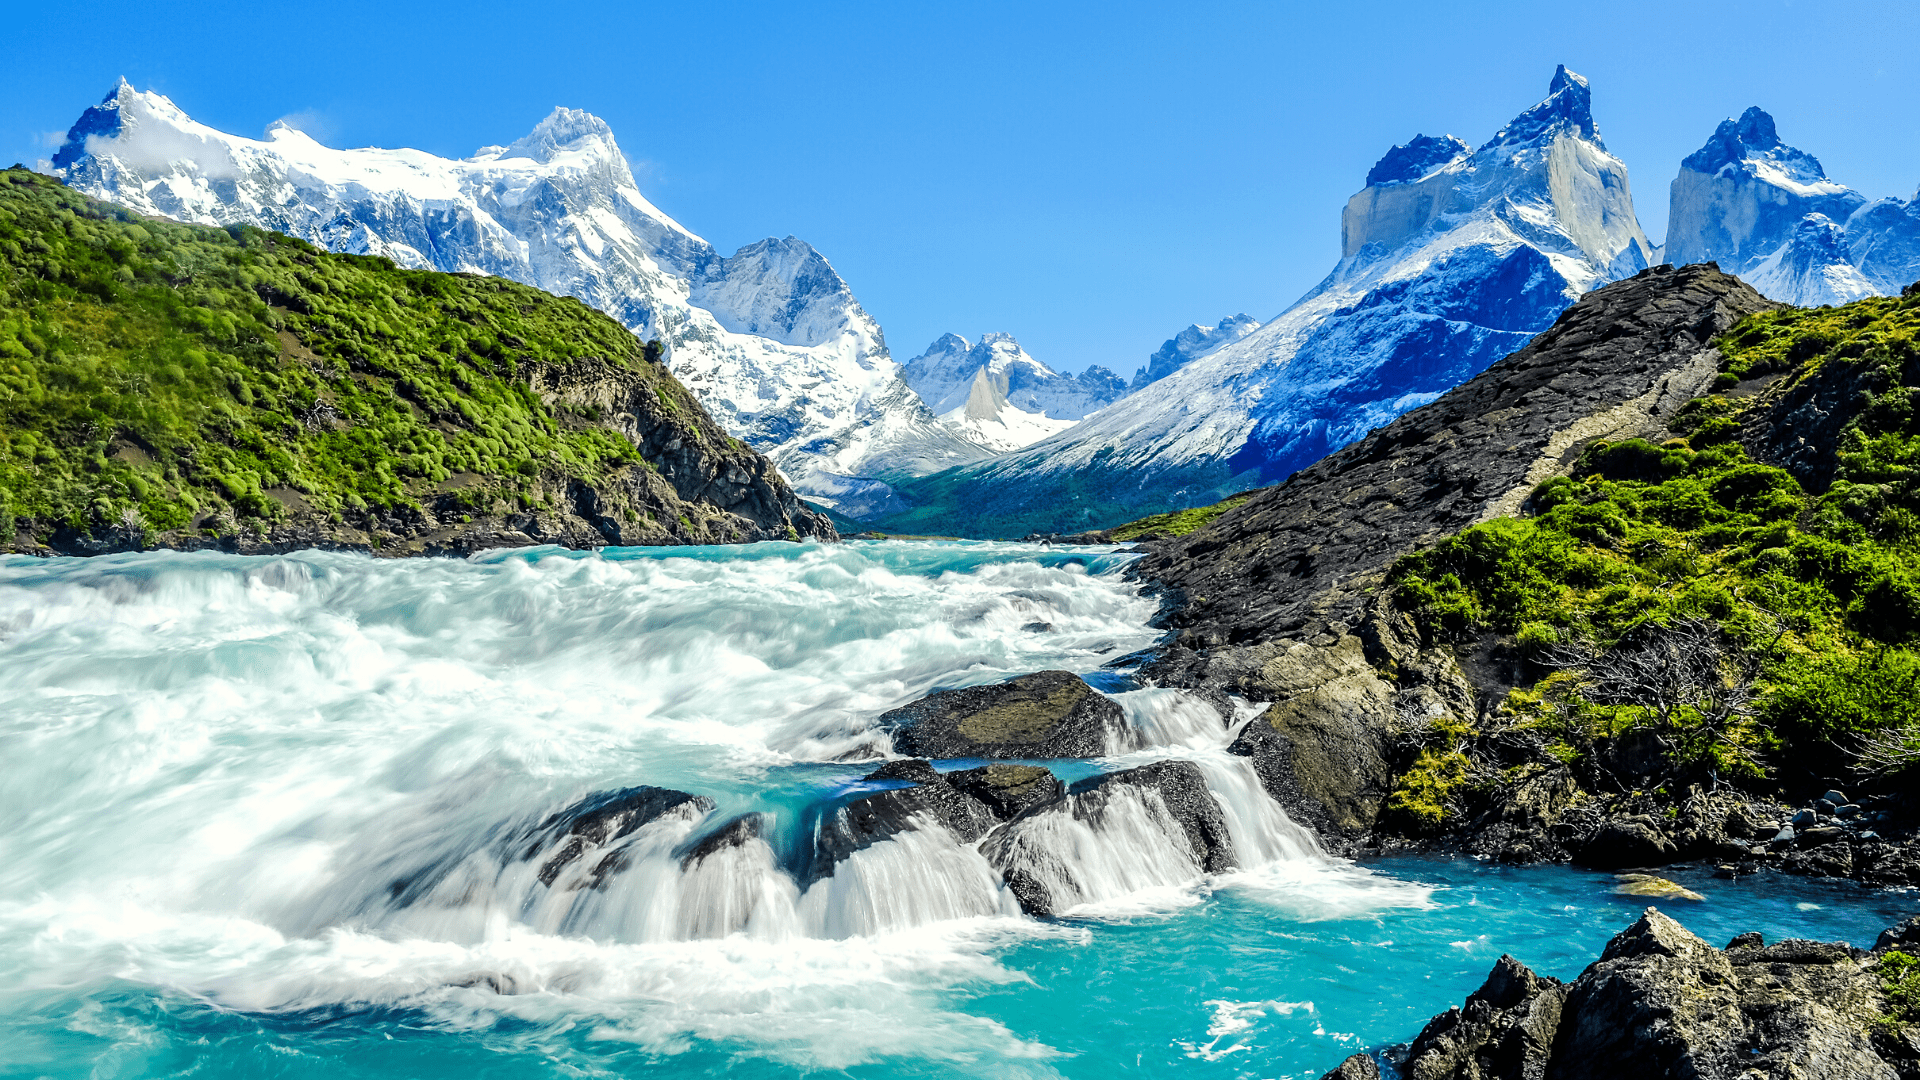 Patagonia Glaciers and Australis Cruise Adventure